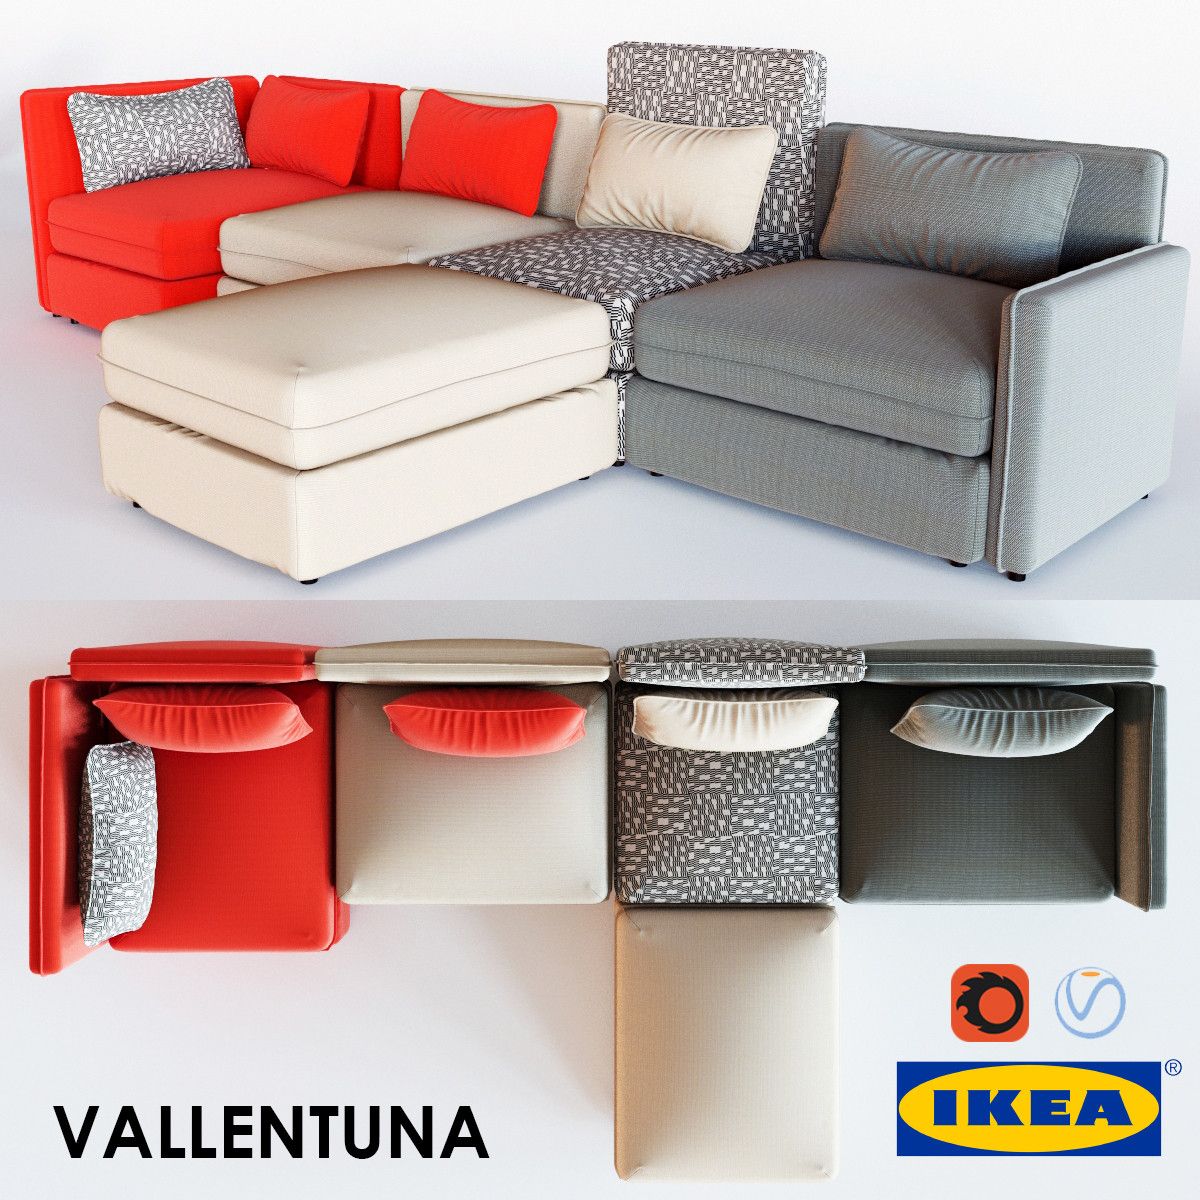 Mobilier De Jardin Ikea Unique 3d Vallentuna Series Model 3d Model Déco En 2019